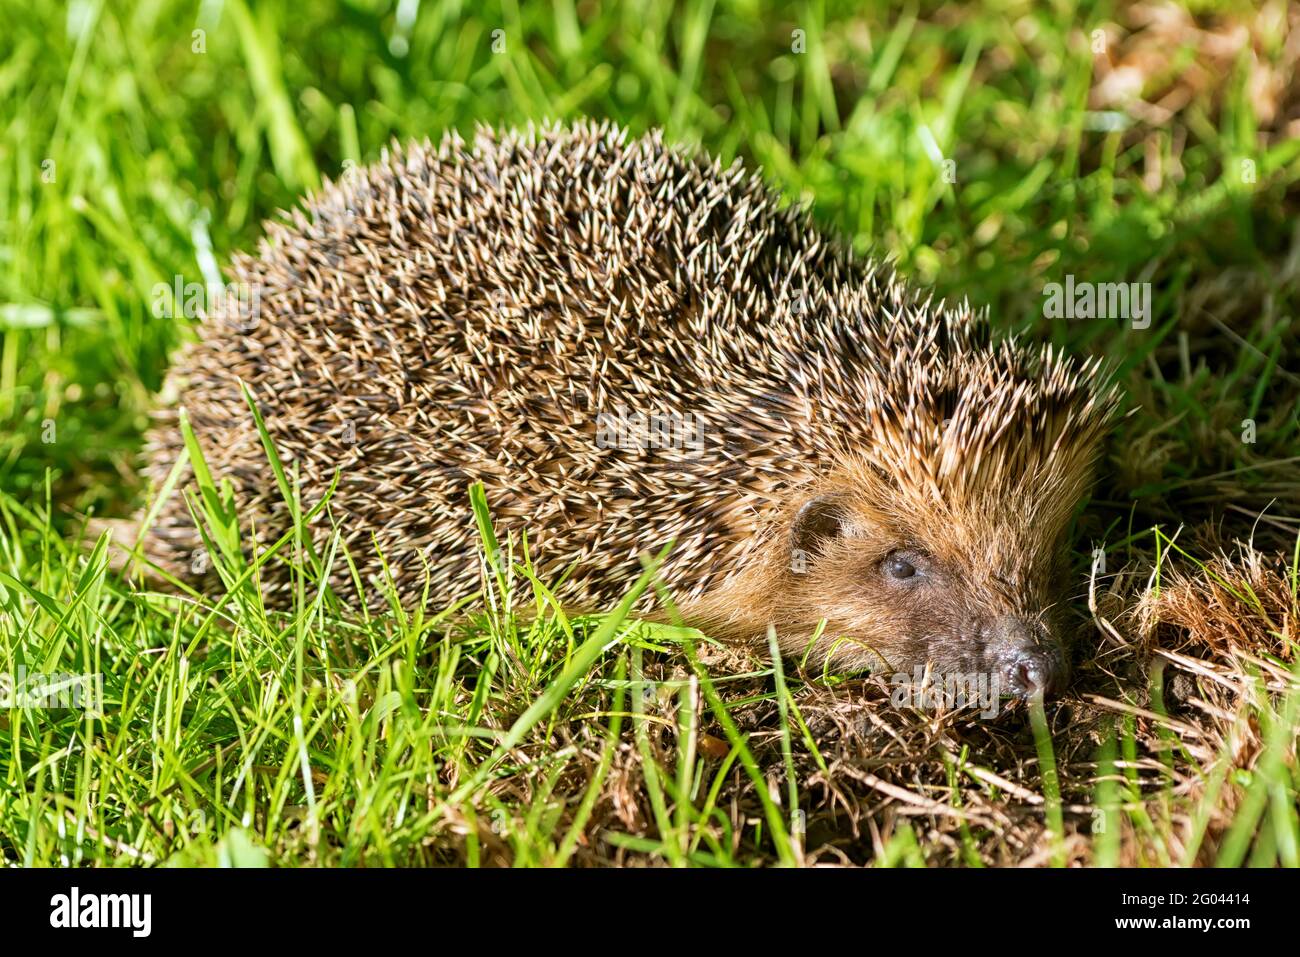 European hedgehog (Erinaceus europaeus), also known as the West European hedgehog. Stock Photo